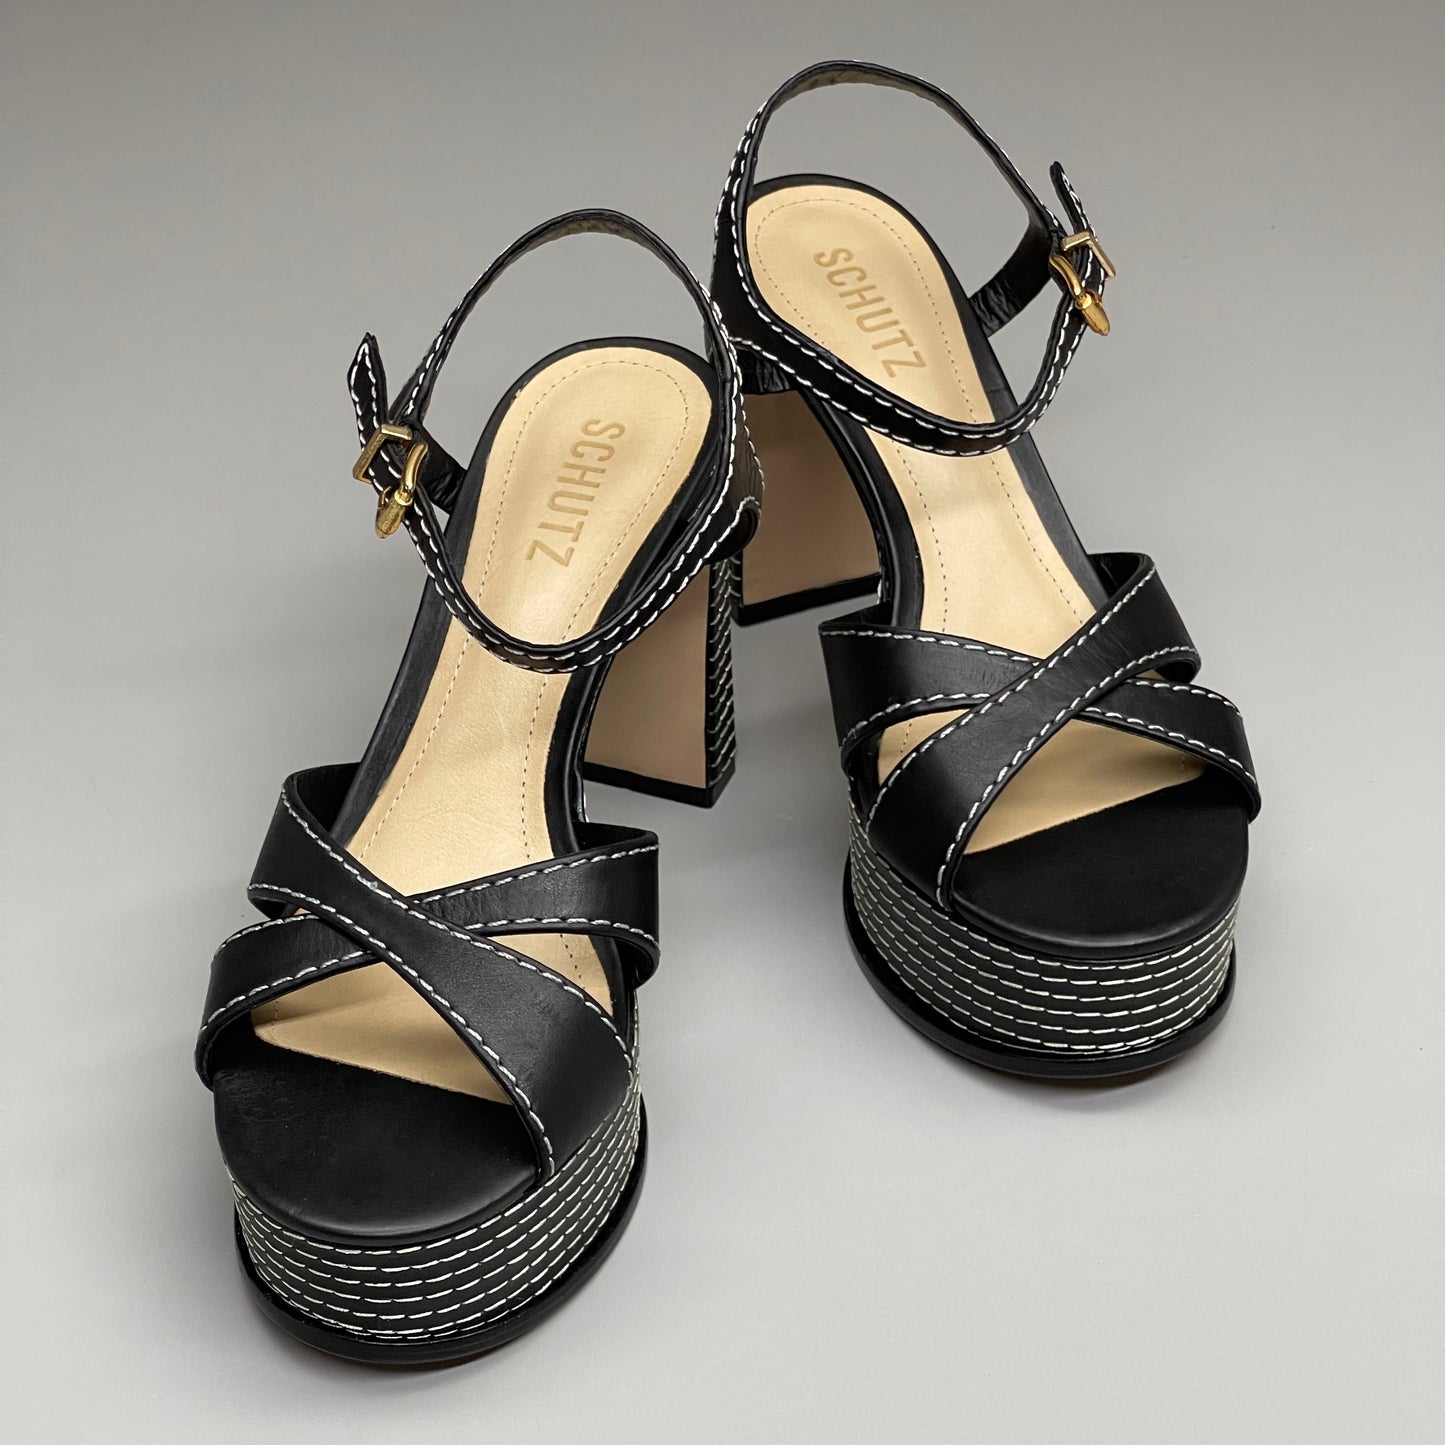 SCHUTZ Keefa Casual Women's Leather Sandal Black Platform 4" Heel Shoes Sz 8.5B (New)